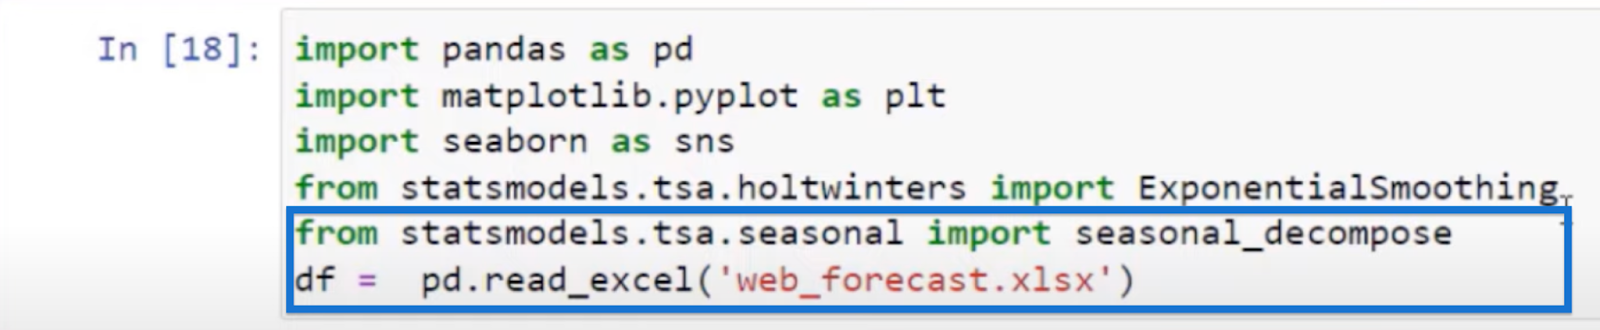 Power BI Forecasting Model Using Python